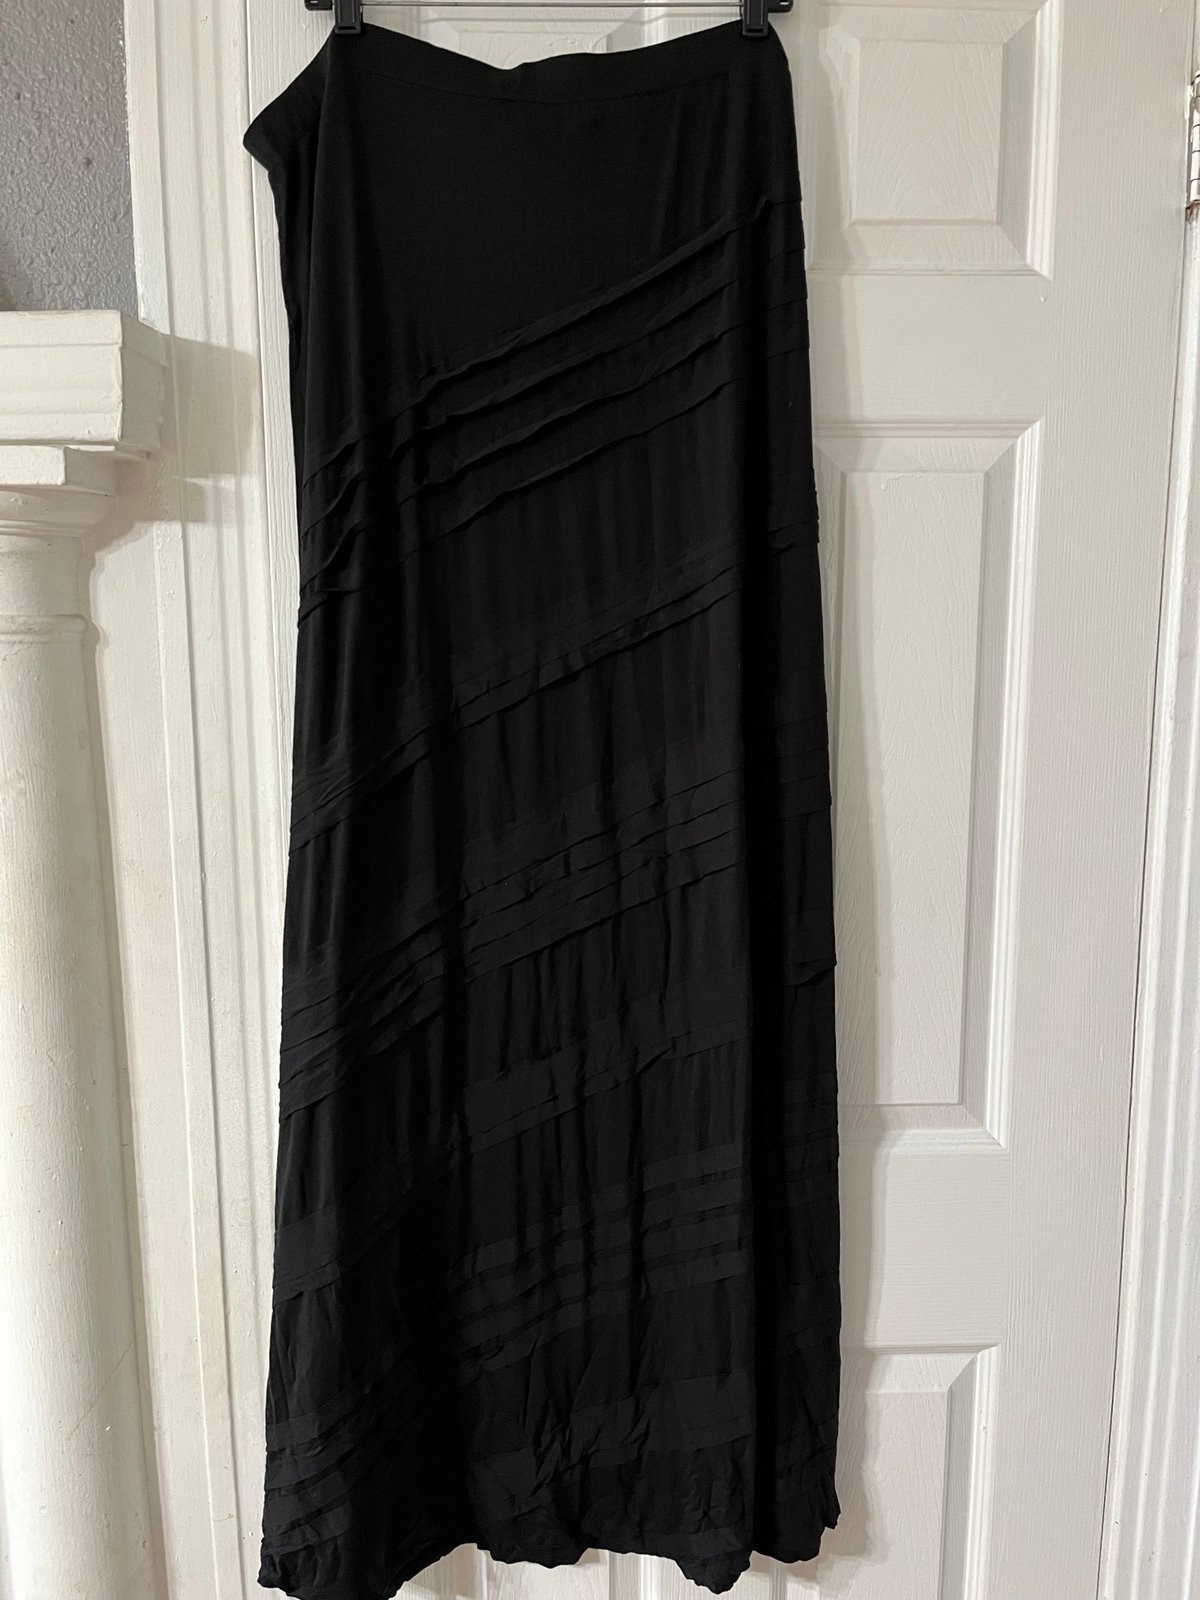 Wholesale price Long Elegant Legs Women’s Size 16 Black Long Skirt Raffles Elastic Waist Skirt, L1B1BZDDB Cool